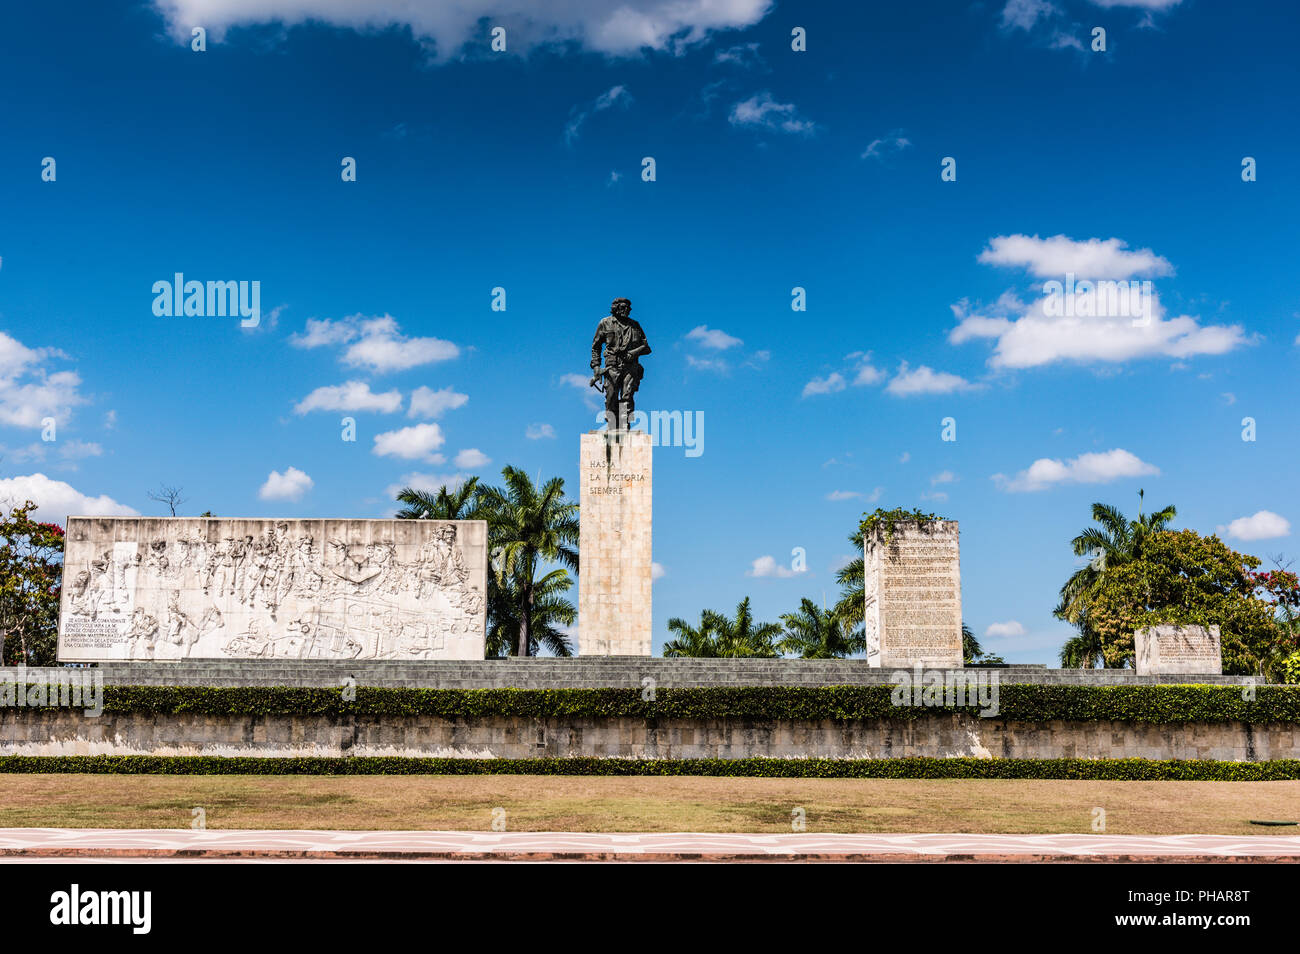 Santa Clara, Cuba / 16 mars 2016 : statue en bronze de chef militaire révolutionnaire Che Guevara. Banque D'Images